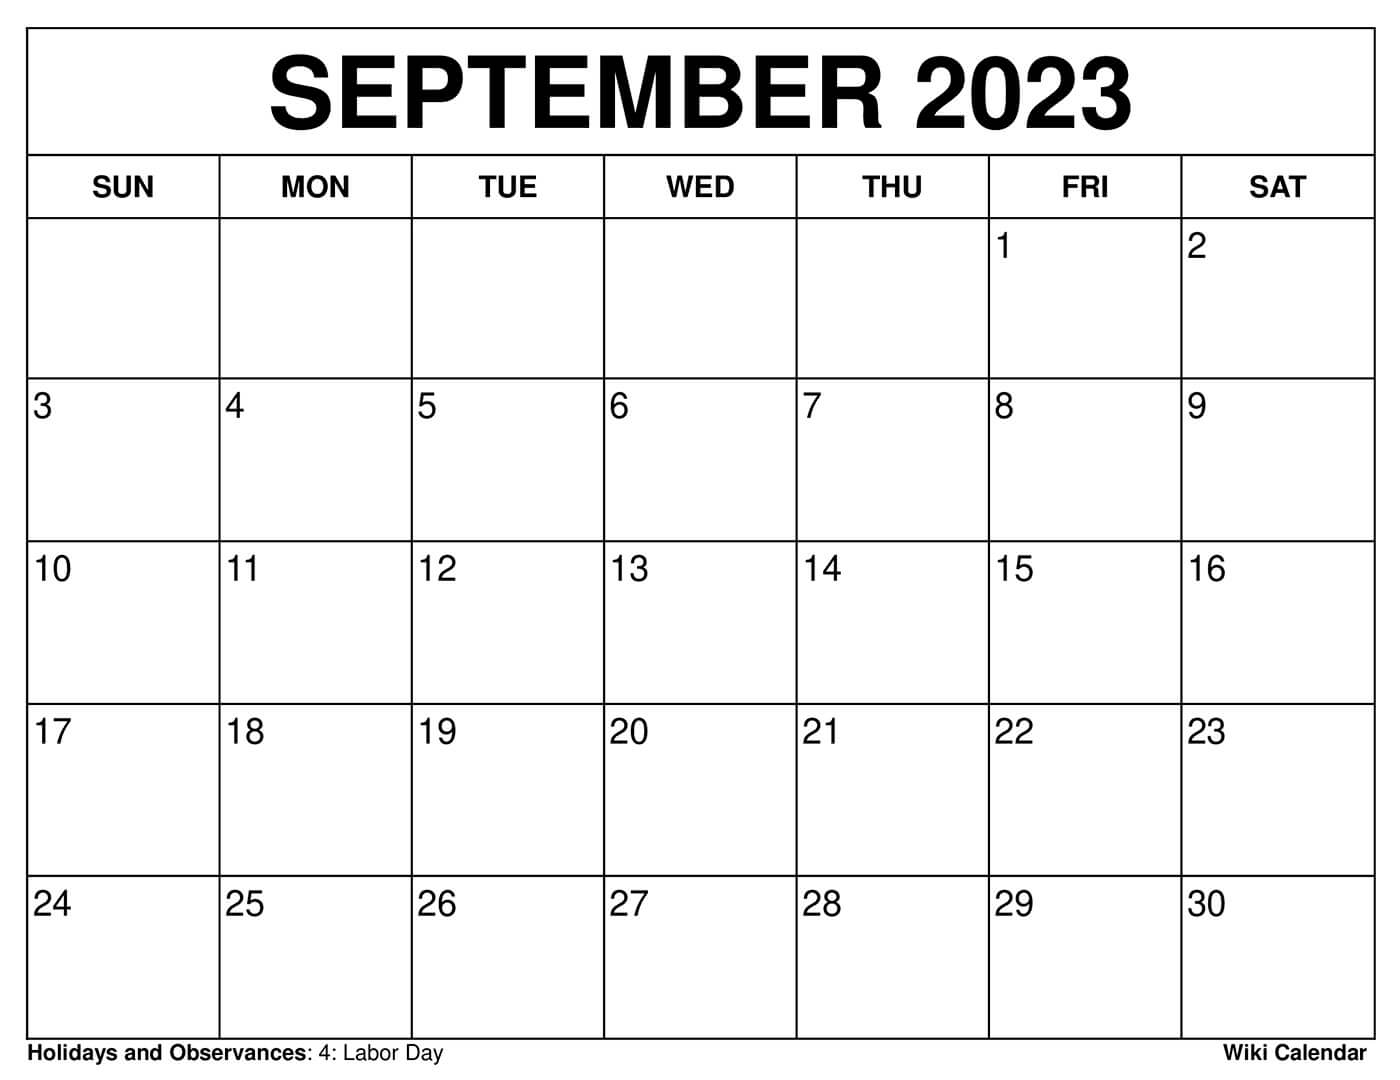 Sept 2022 Calendar Printable Free Printable September 2022 Calendars - Wiki Calendar